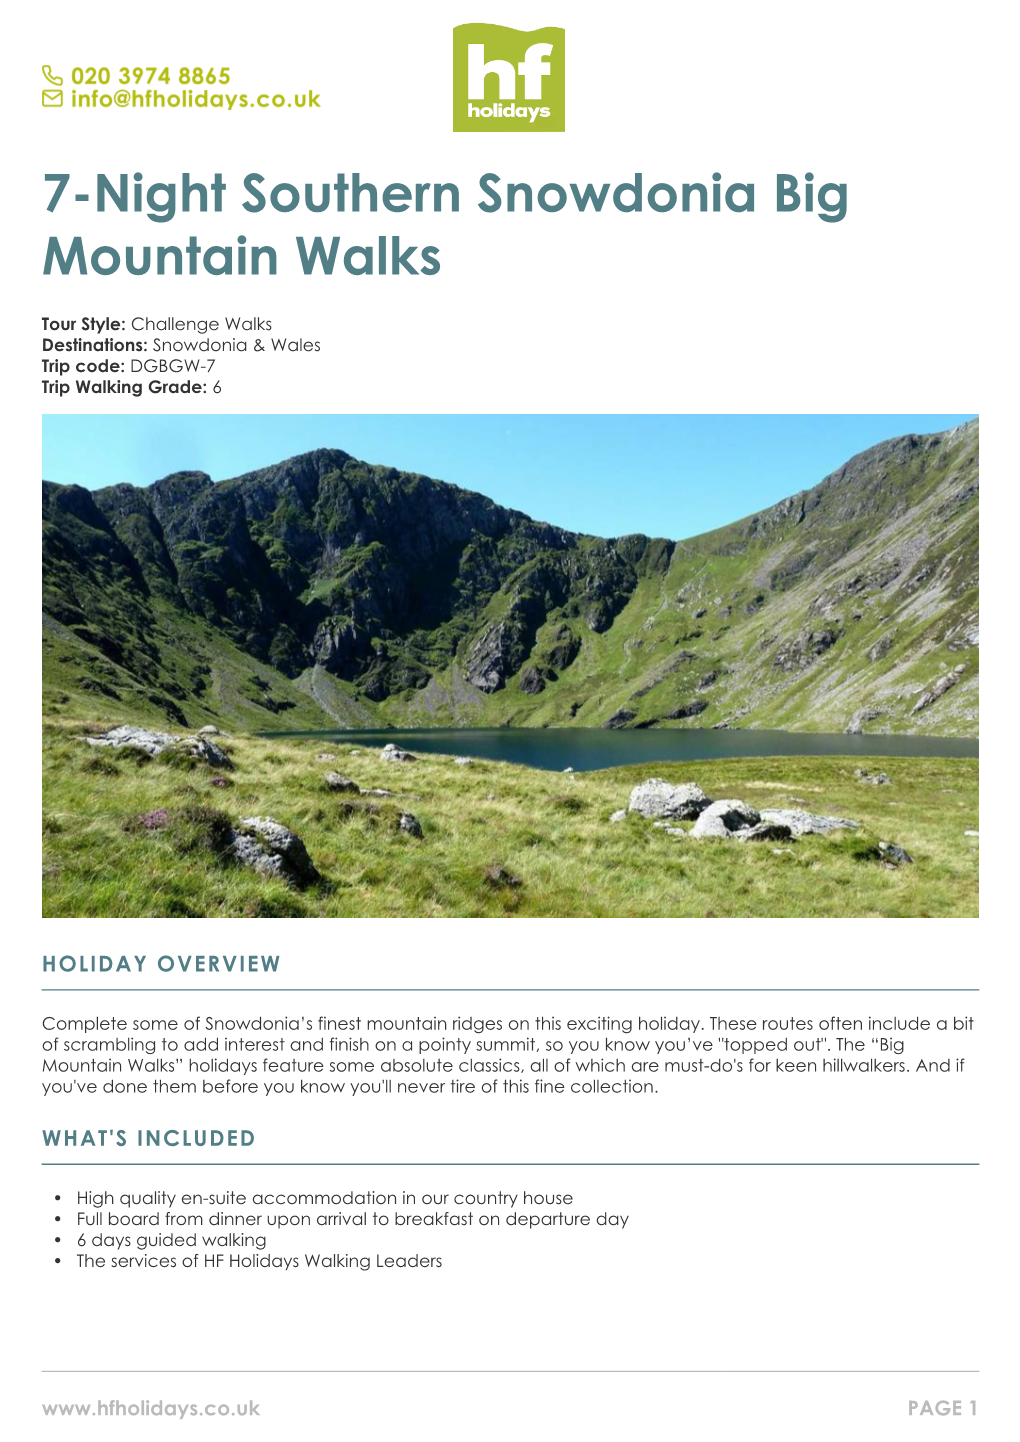 7-Night Southern Snowdonia Big Mountain Walks